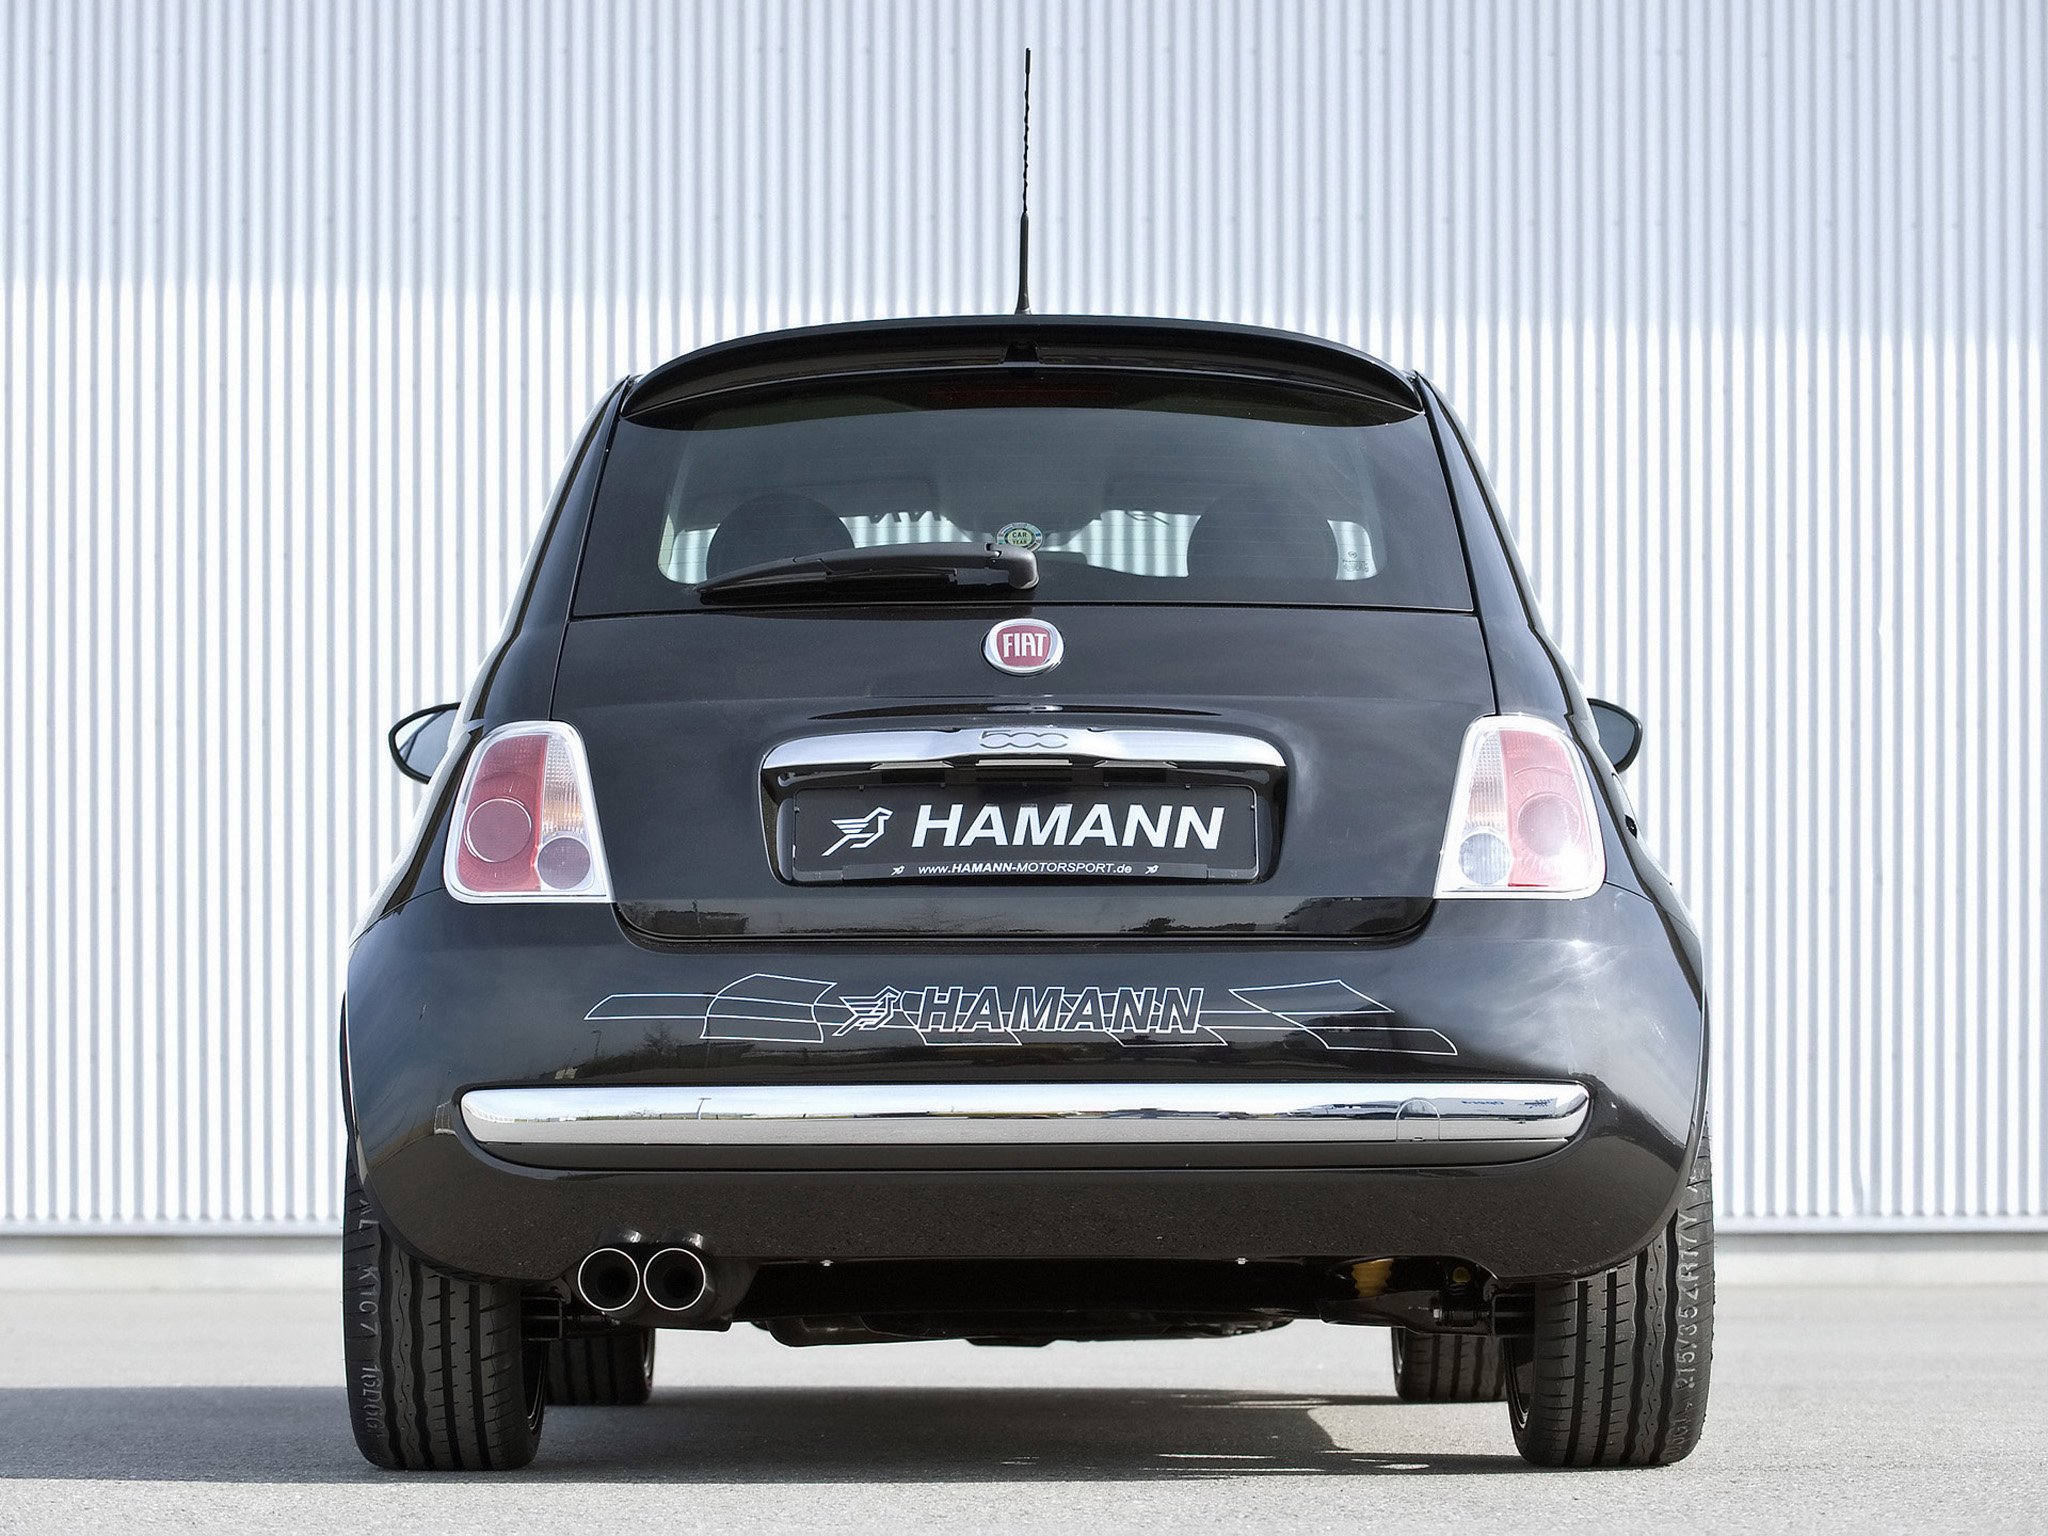 hamann, Fiat, 500, Cars, Modified, 2008 Wallpaper